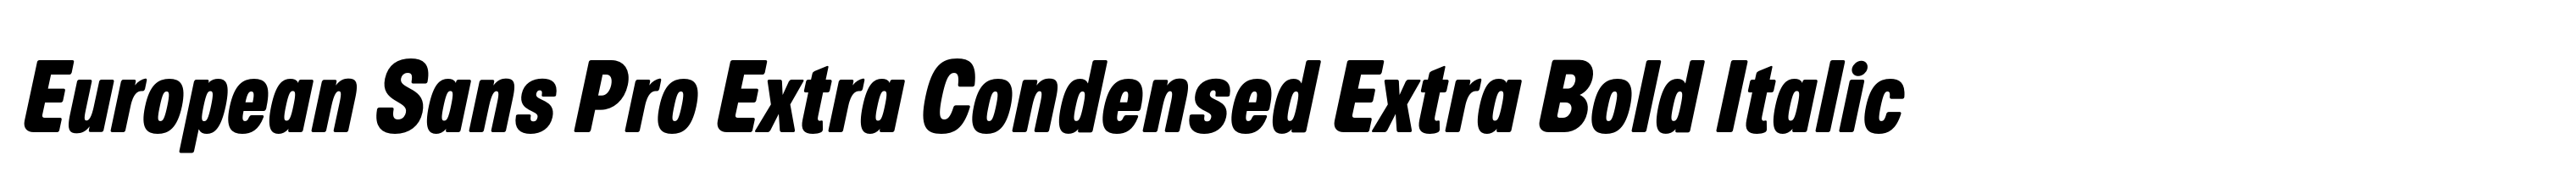 European Sans Pro Extra Condensed Extra Bold Italic